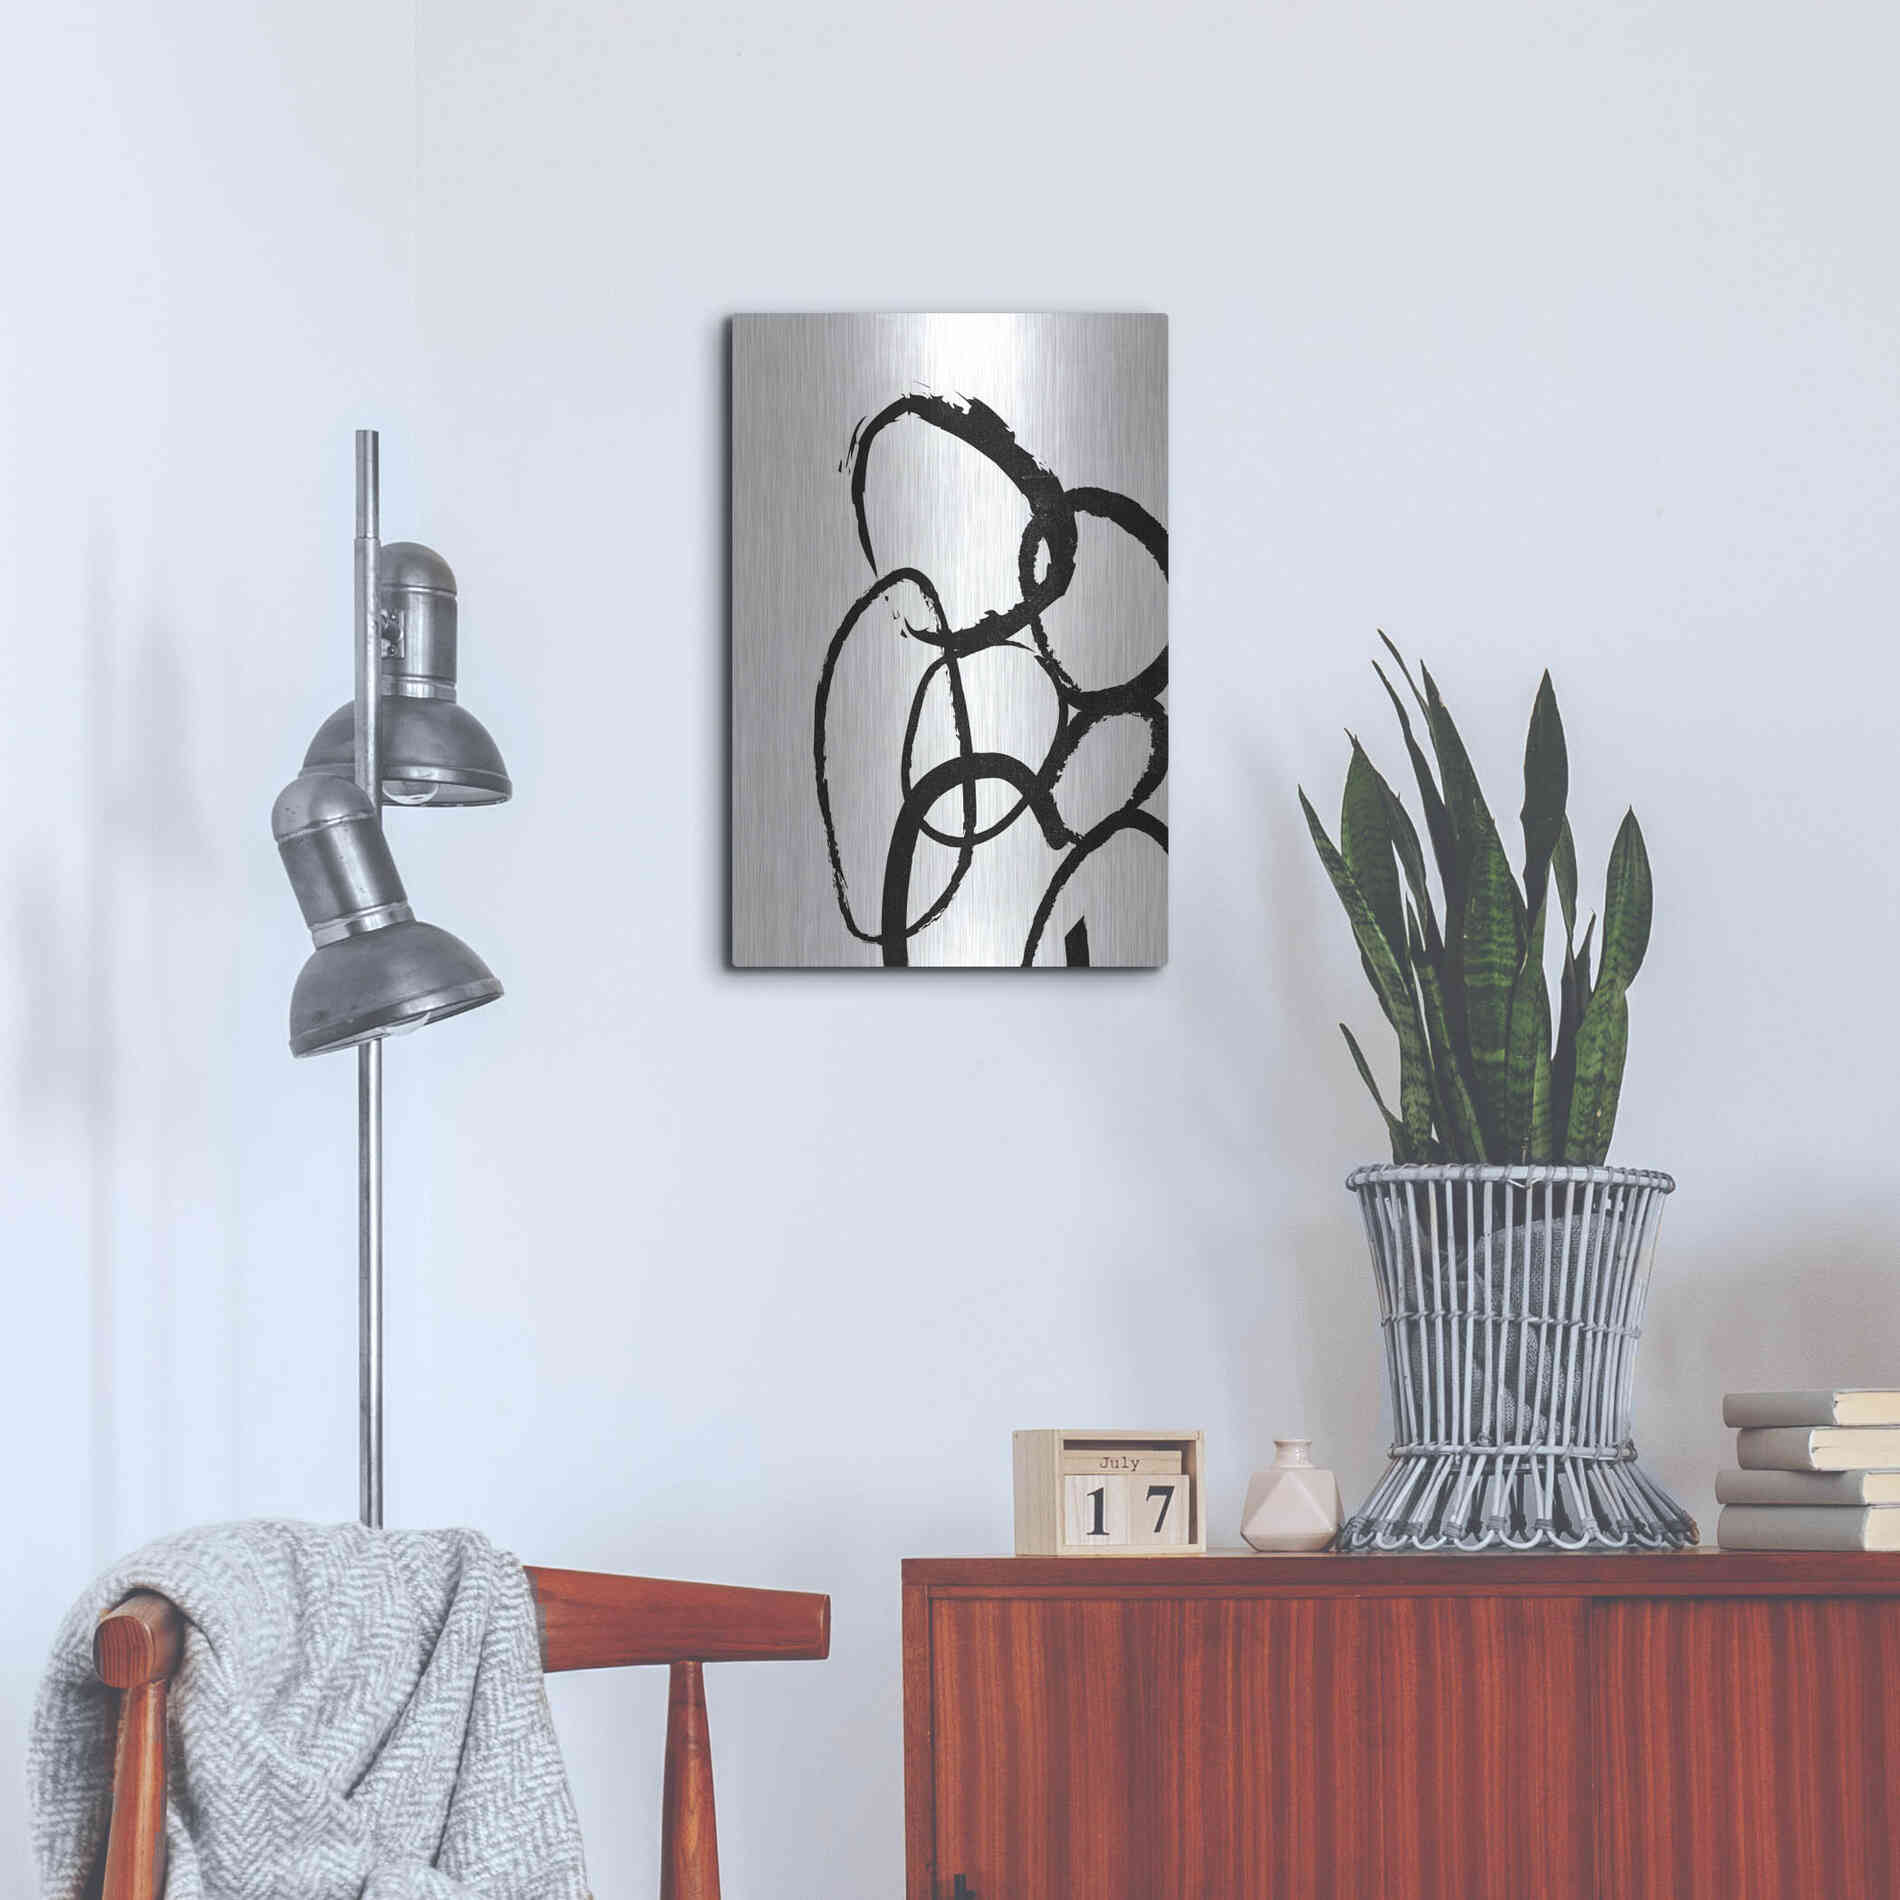 Luxe Metal Art 'Linked 3' by Design Fabrikken, Metal Wall Art,16x24